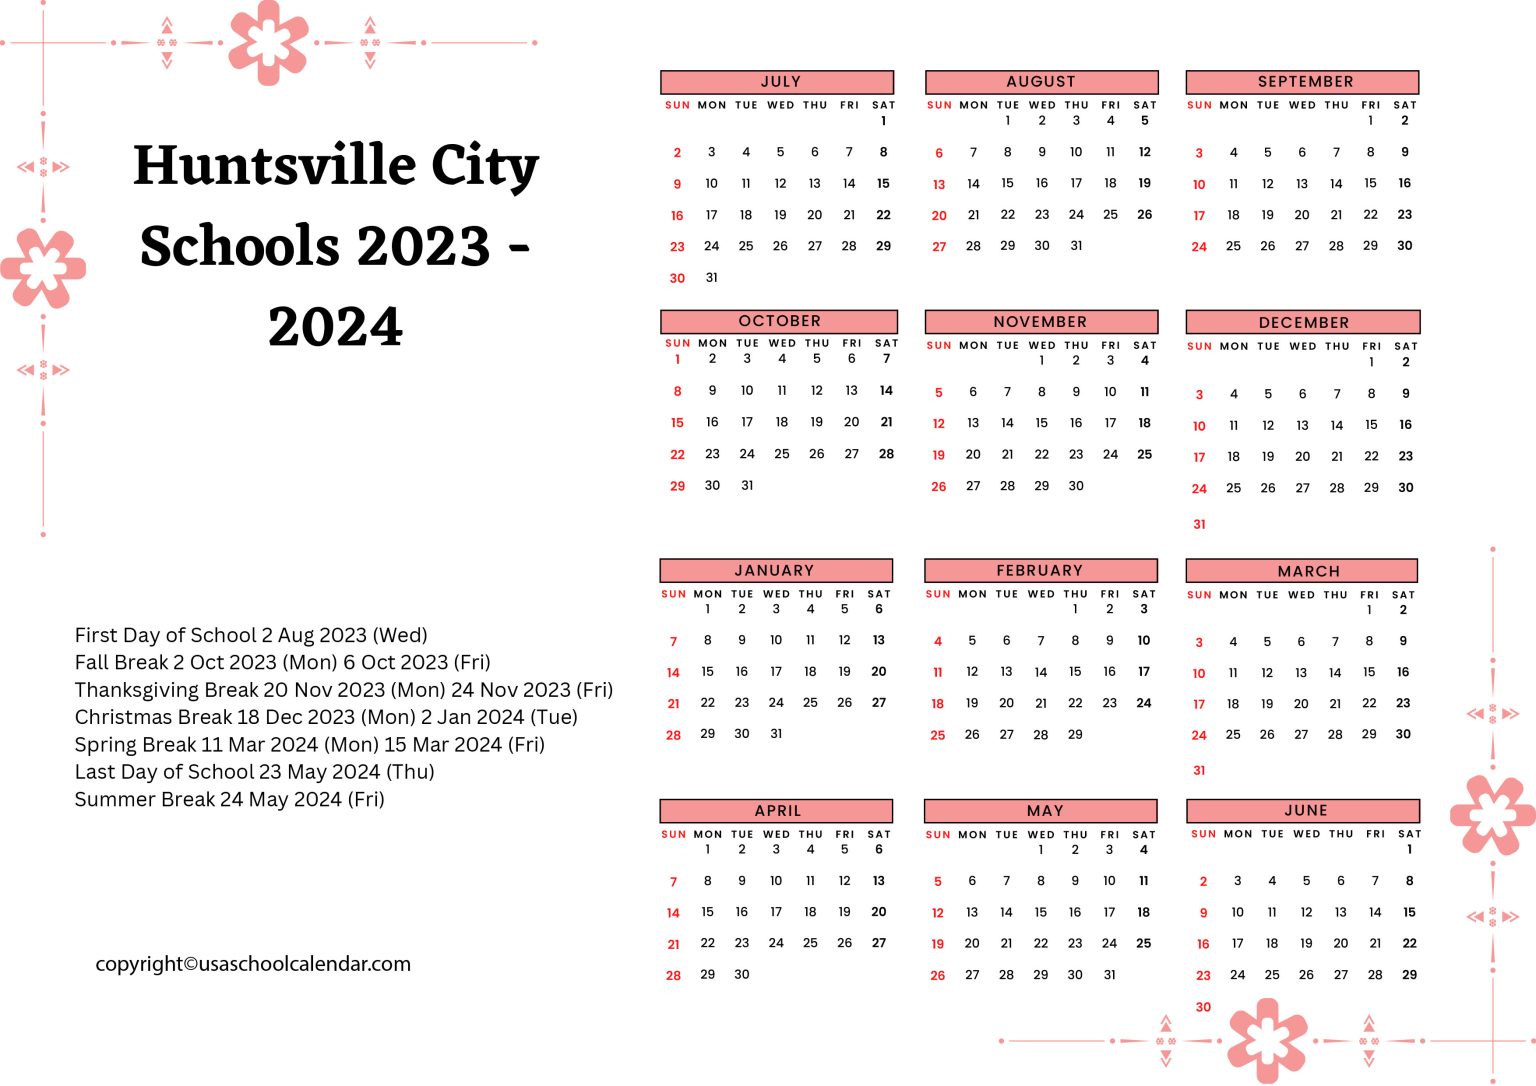 Huntsville City Schools Calendar Holidays 2023 2024 HCS 